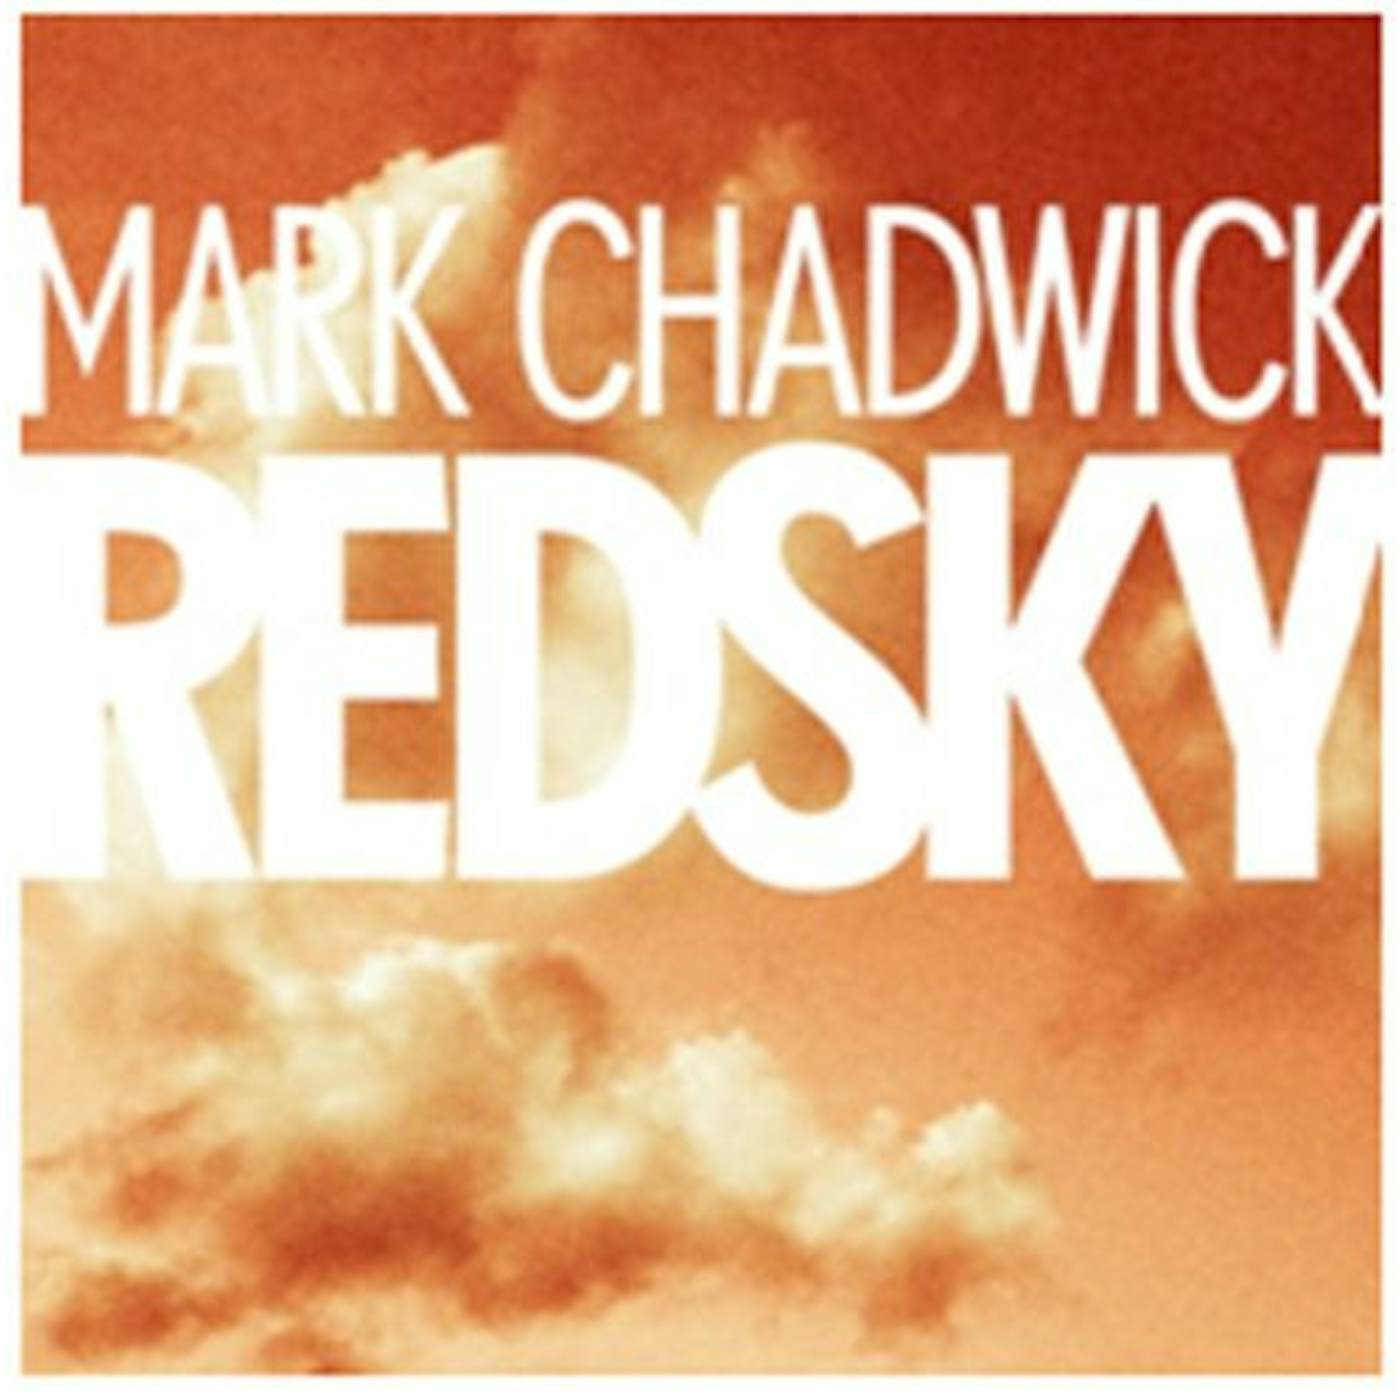 Mark Chadwick Red Sky Vinyl Record